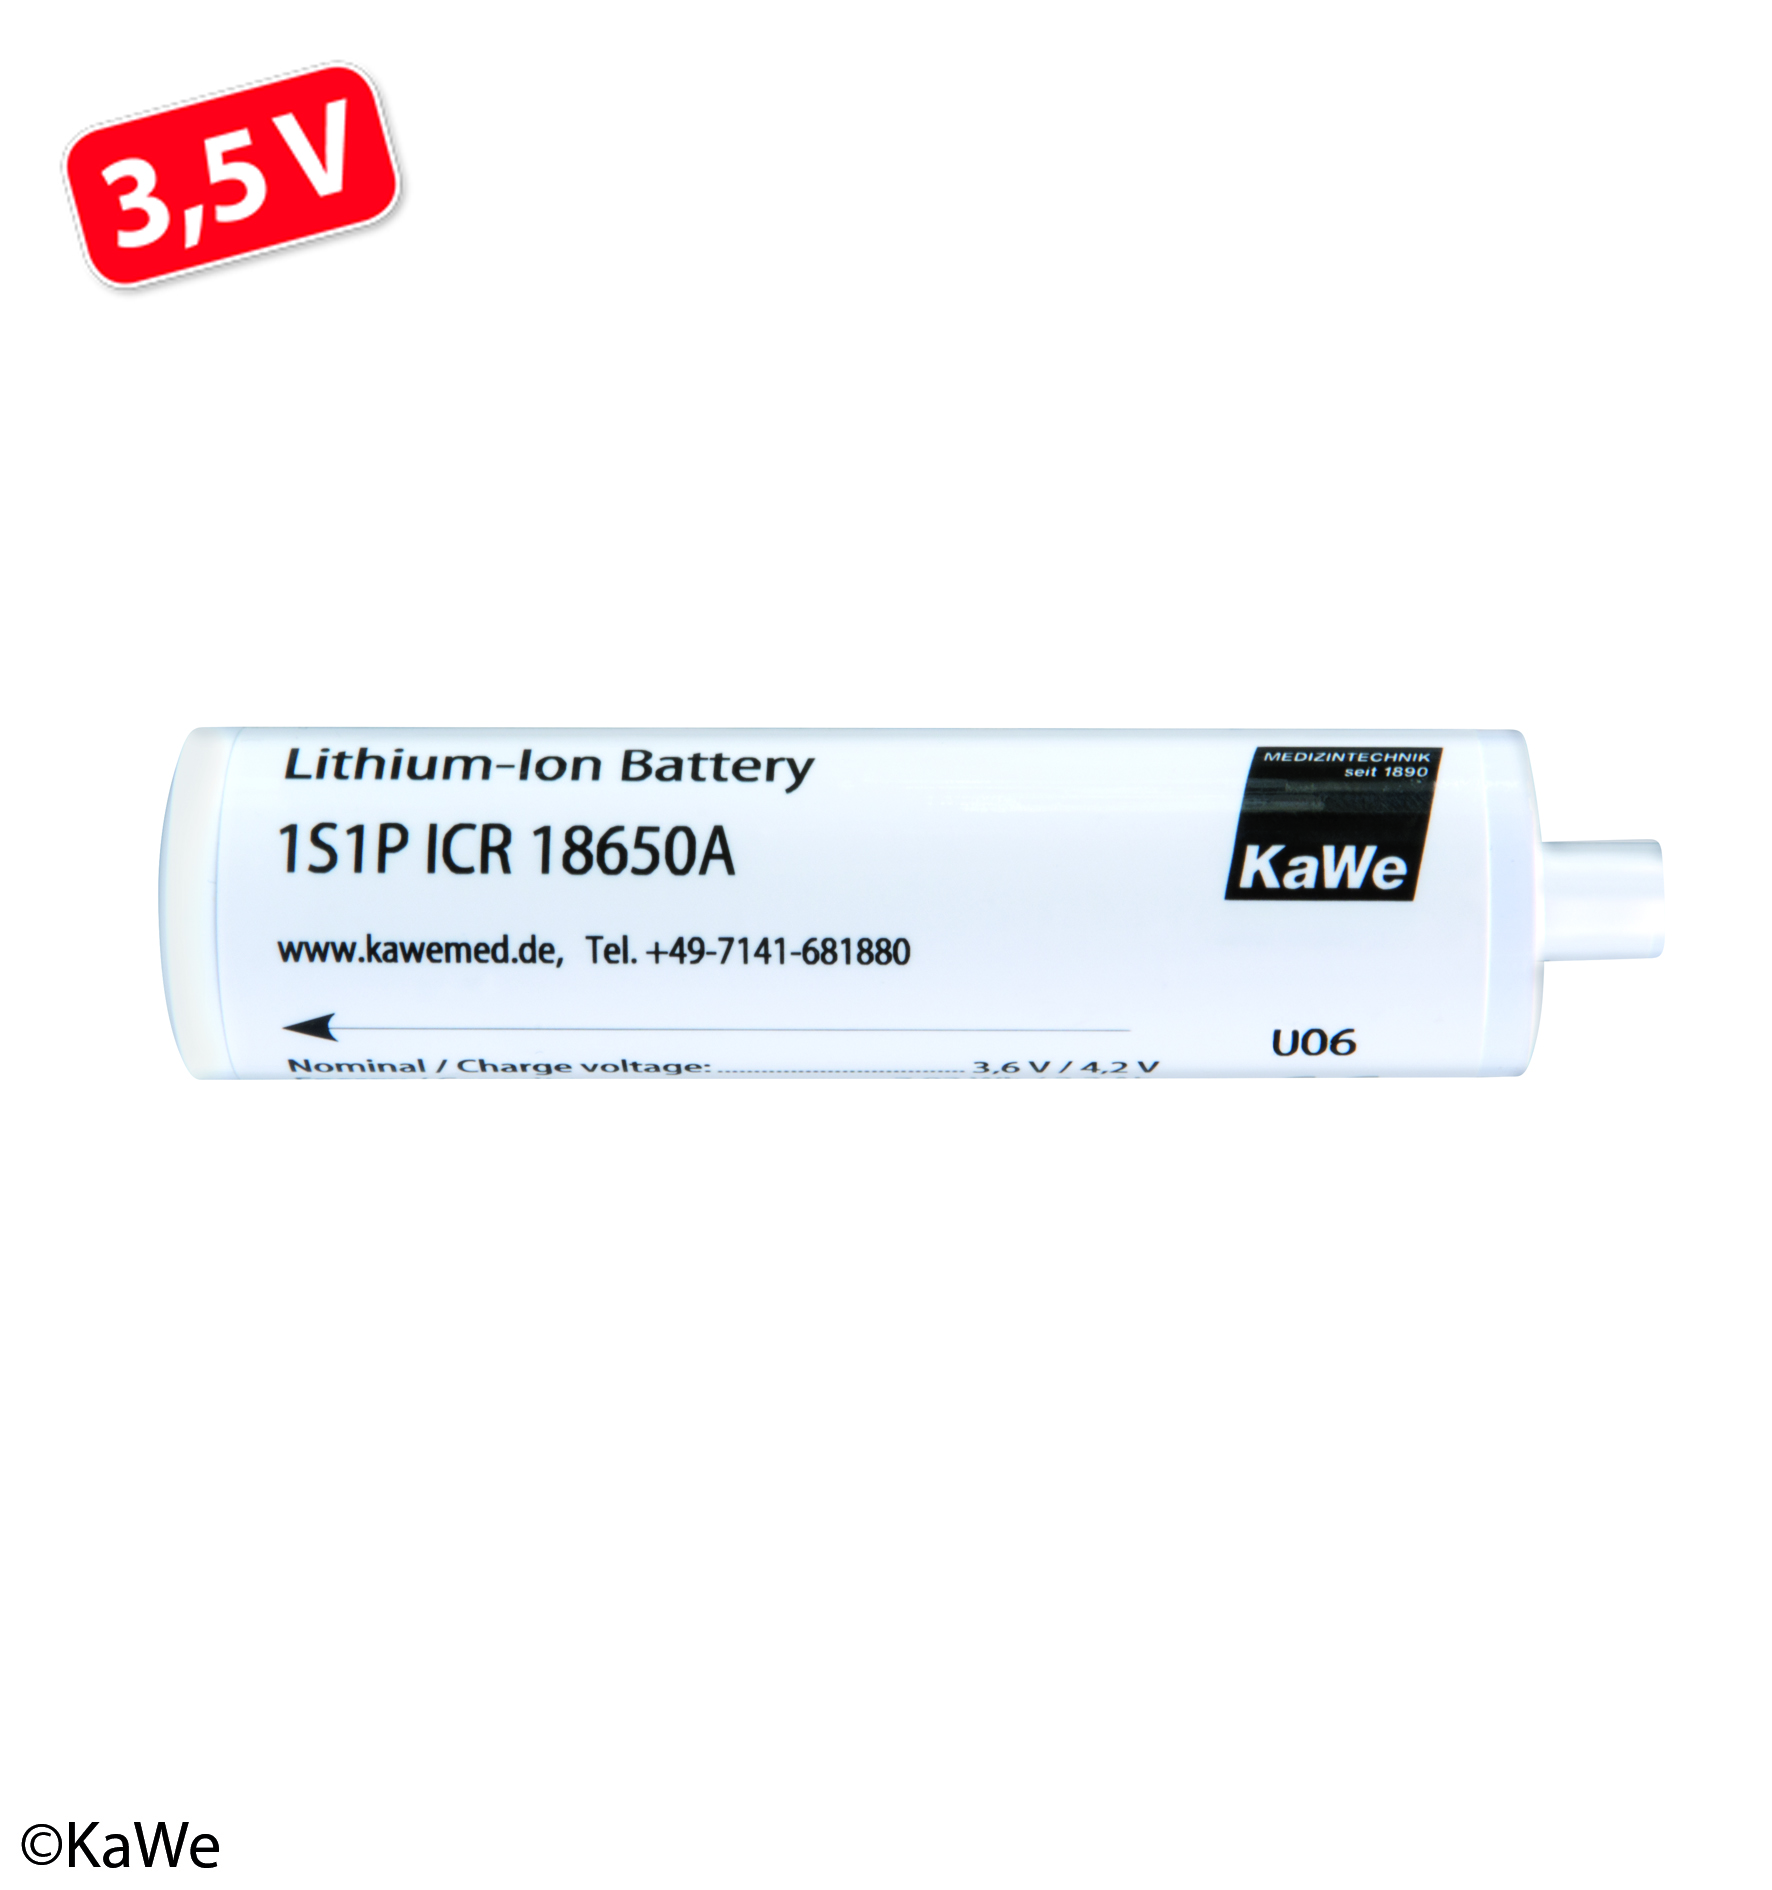 Ladebatterie (Li-Ion) 3,5 V mittel (C)